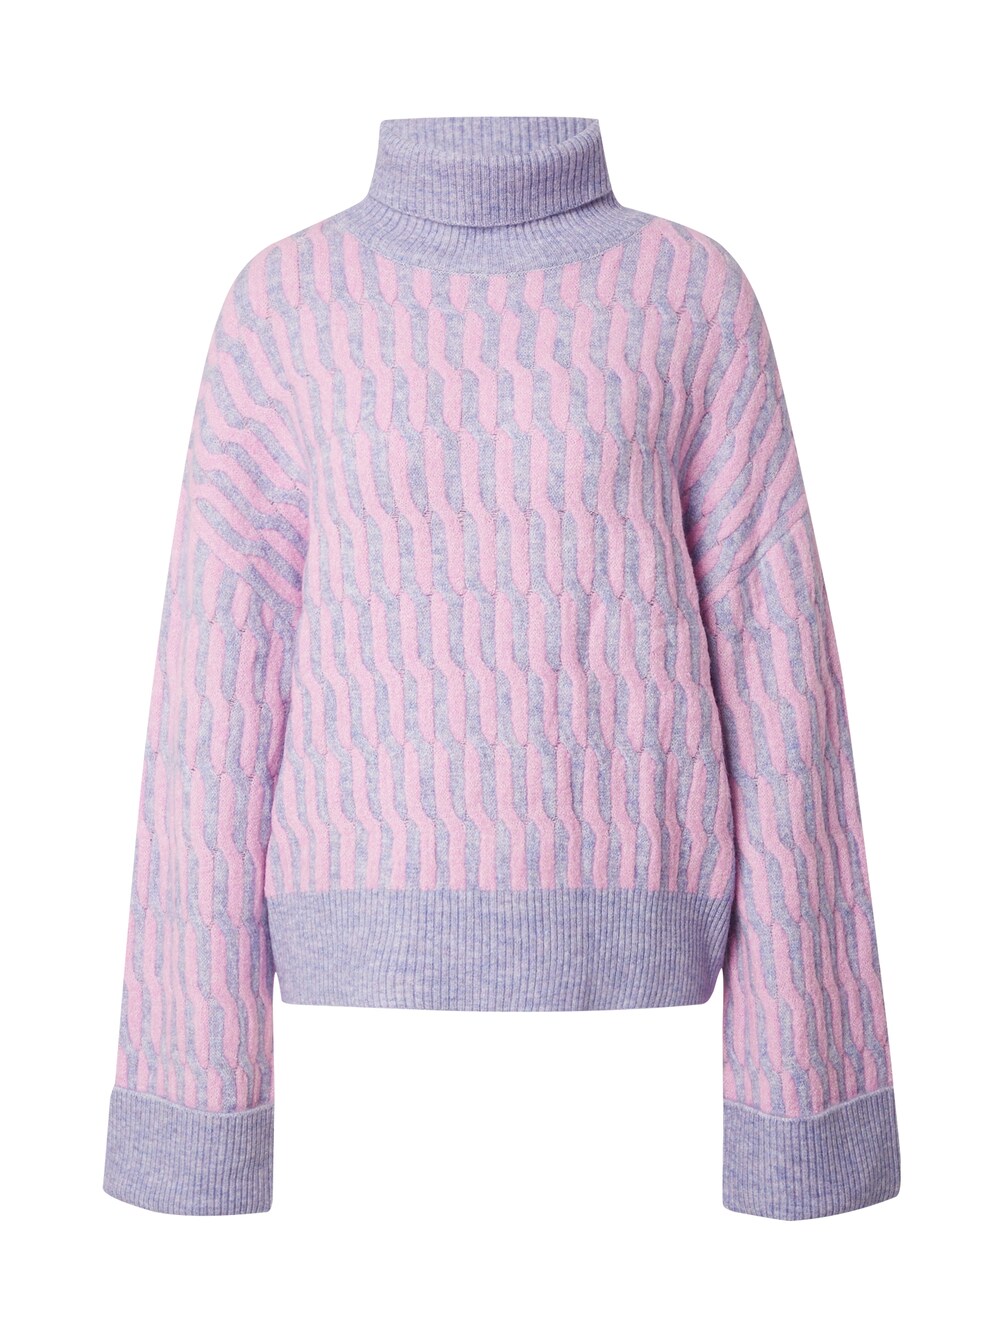 Свитер About You, светло-фиолетовый/розовый свитер about you светло фиолетовый розовый